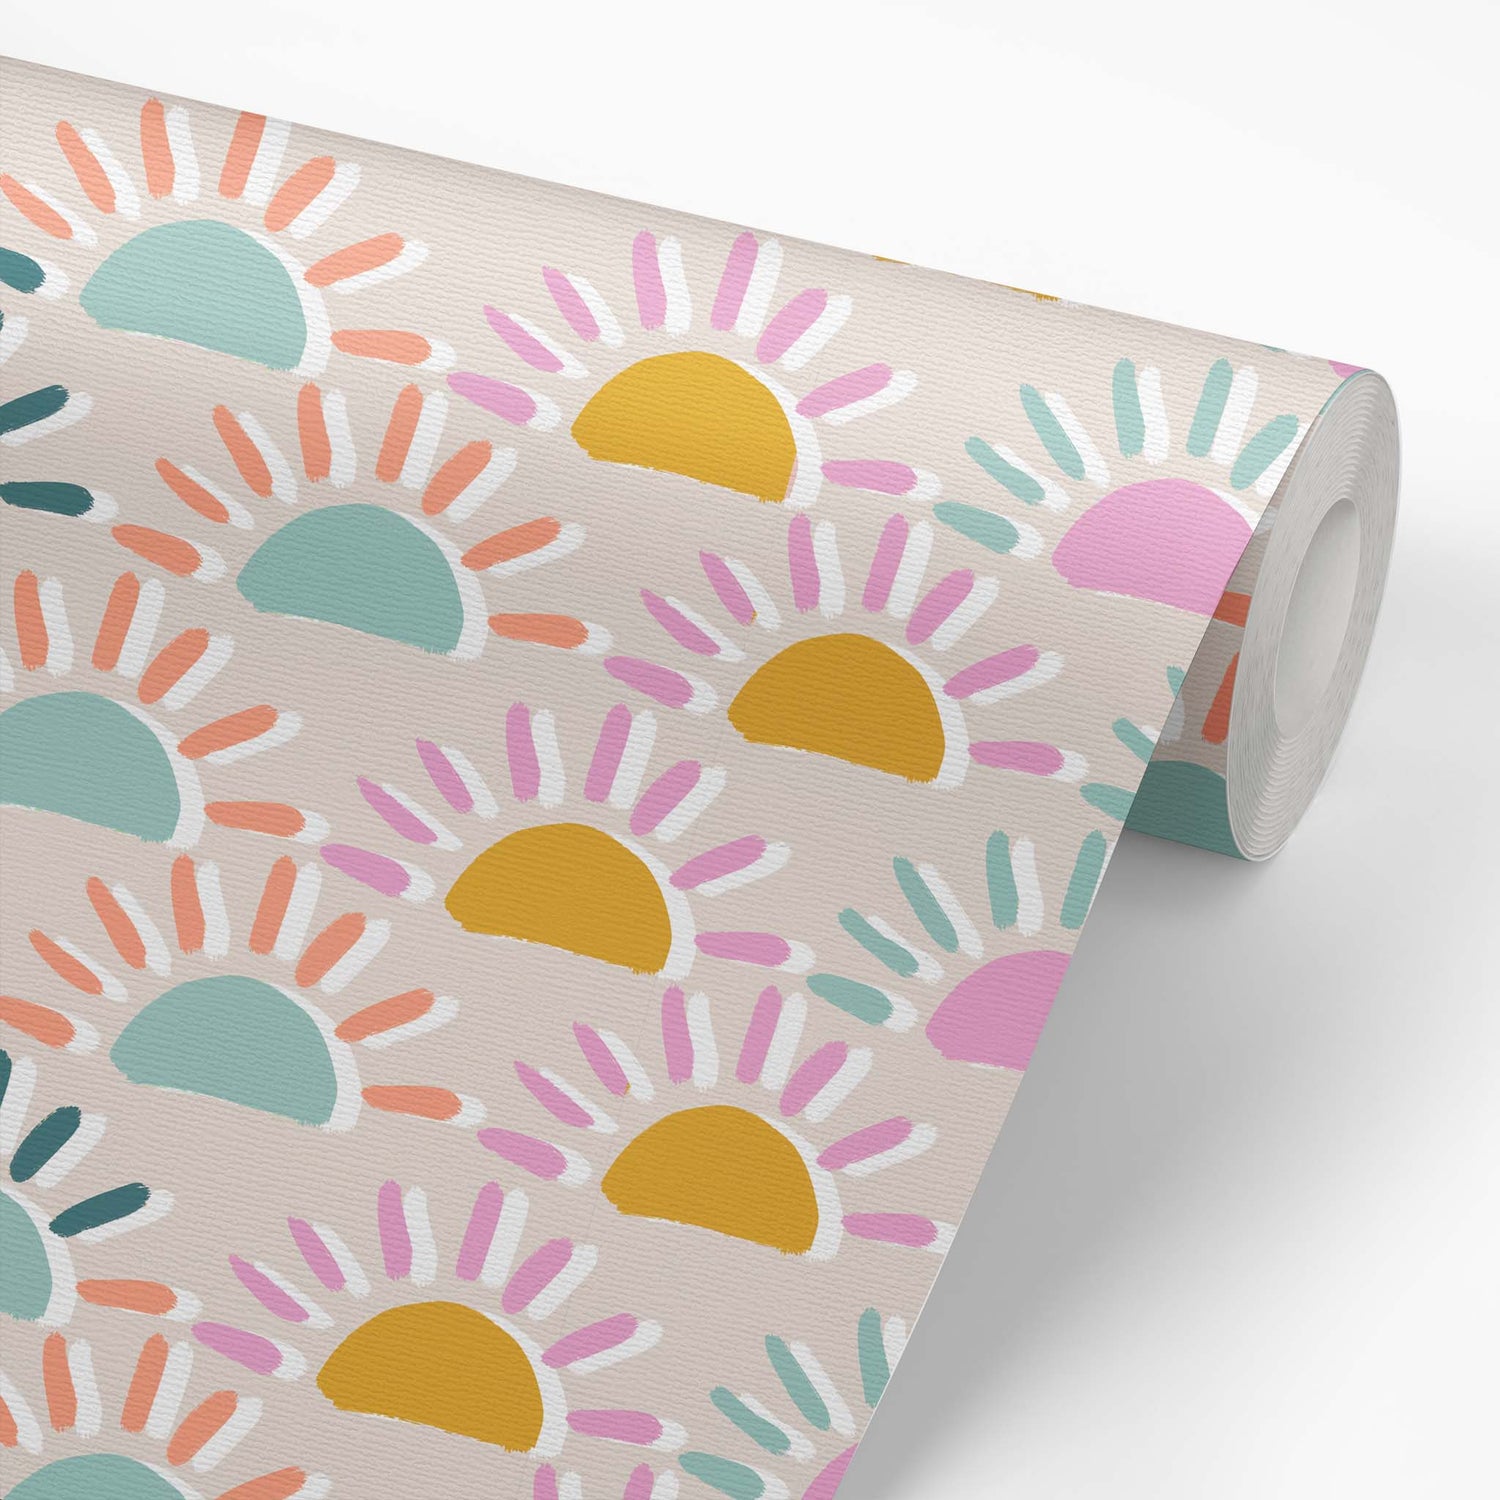 Wallpaper panel featuring Iris + Sea Little Sunshine- Multi a colorful sun pattern